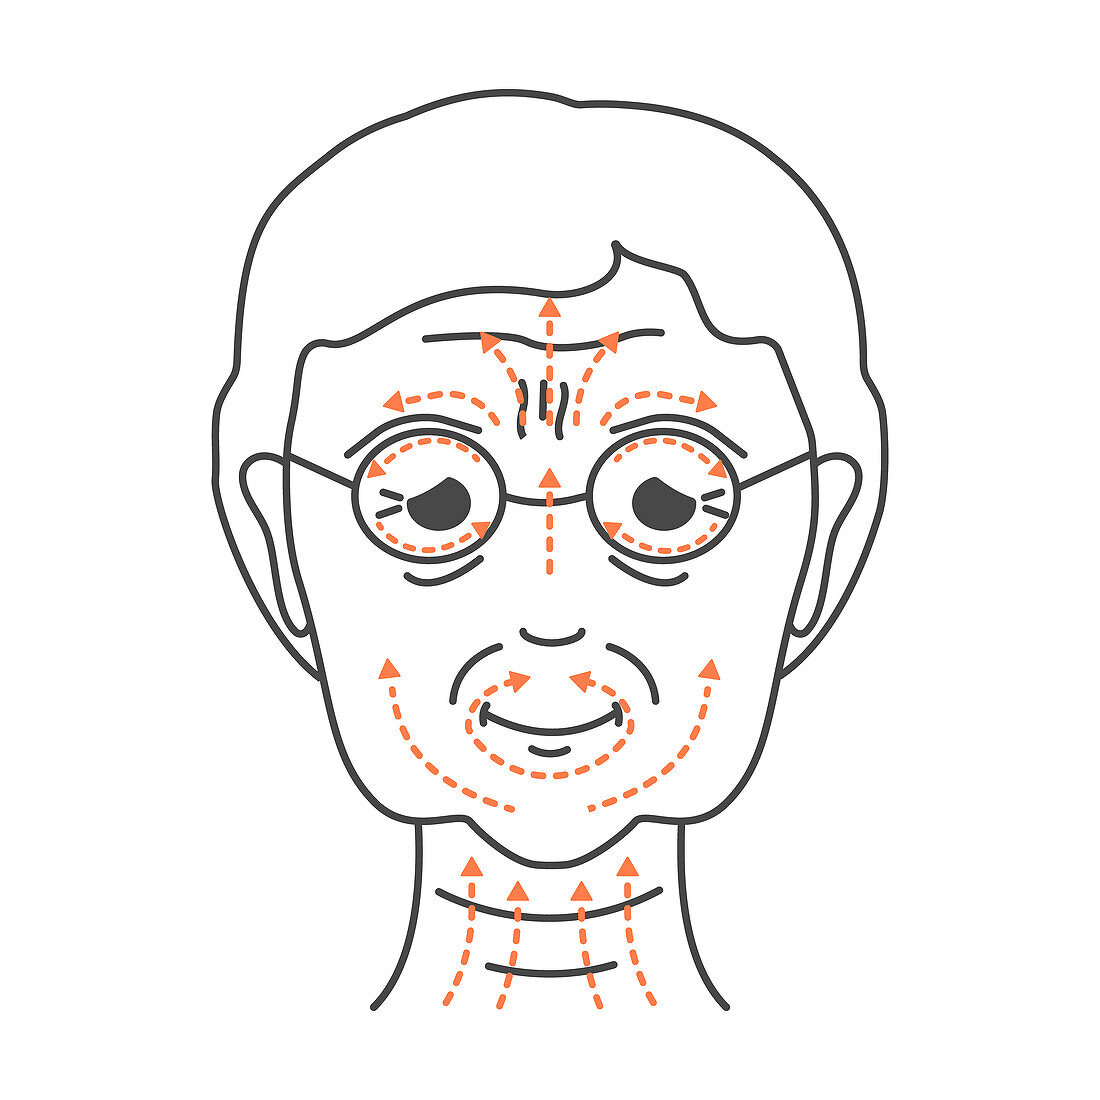 Face massage, conceptual illustration